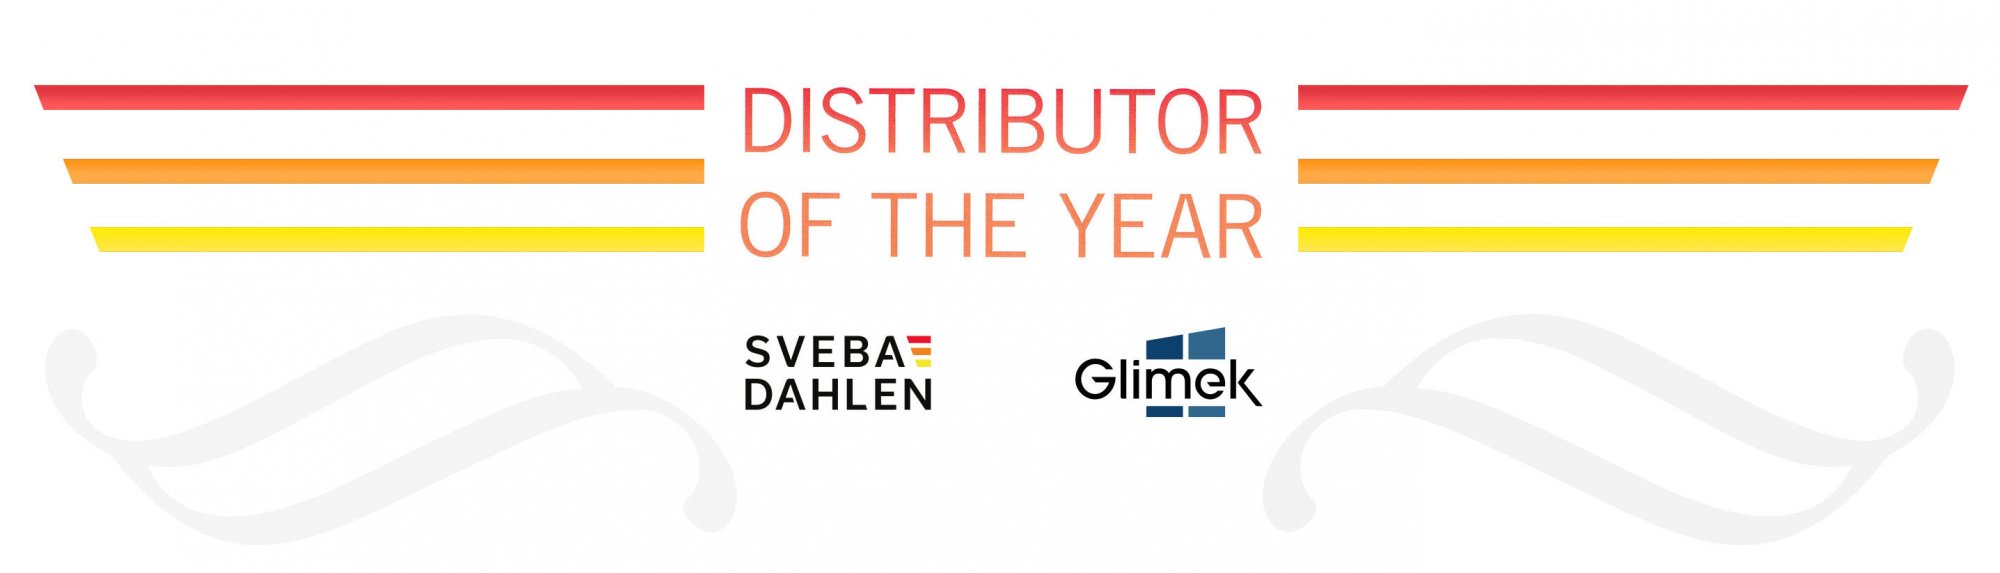 Sveba Dahlen Glimek distributor of the year